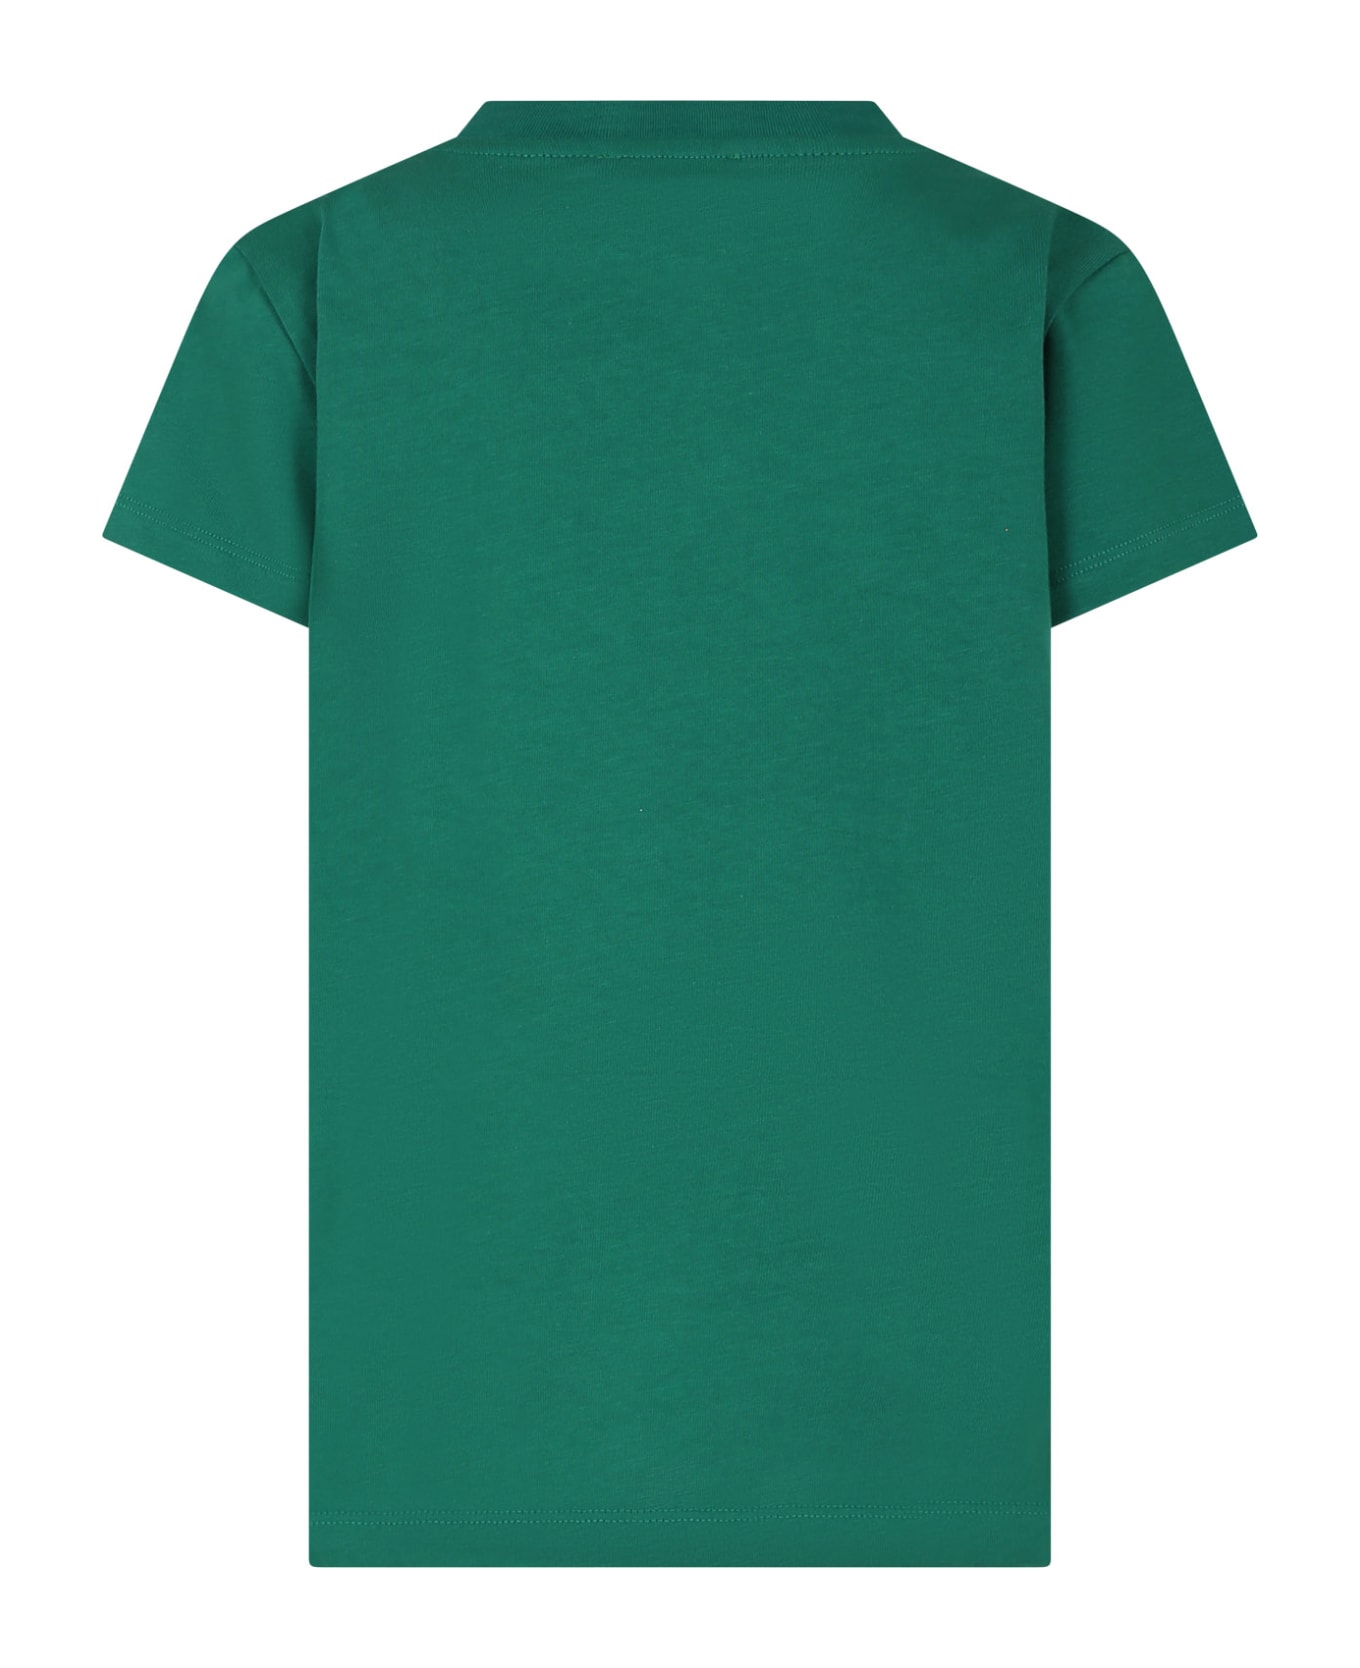 Golden Goose Green T-shirt For Kids With Logo - Green